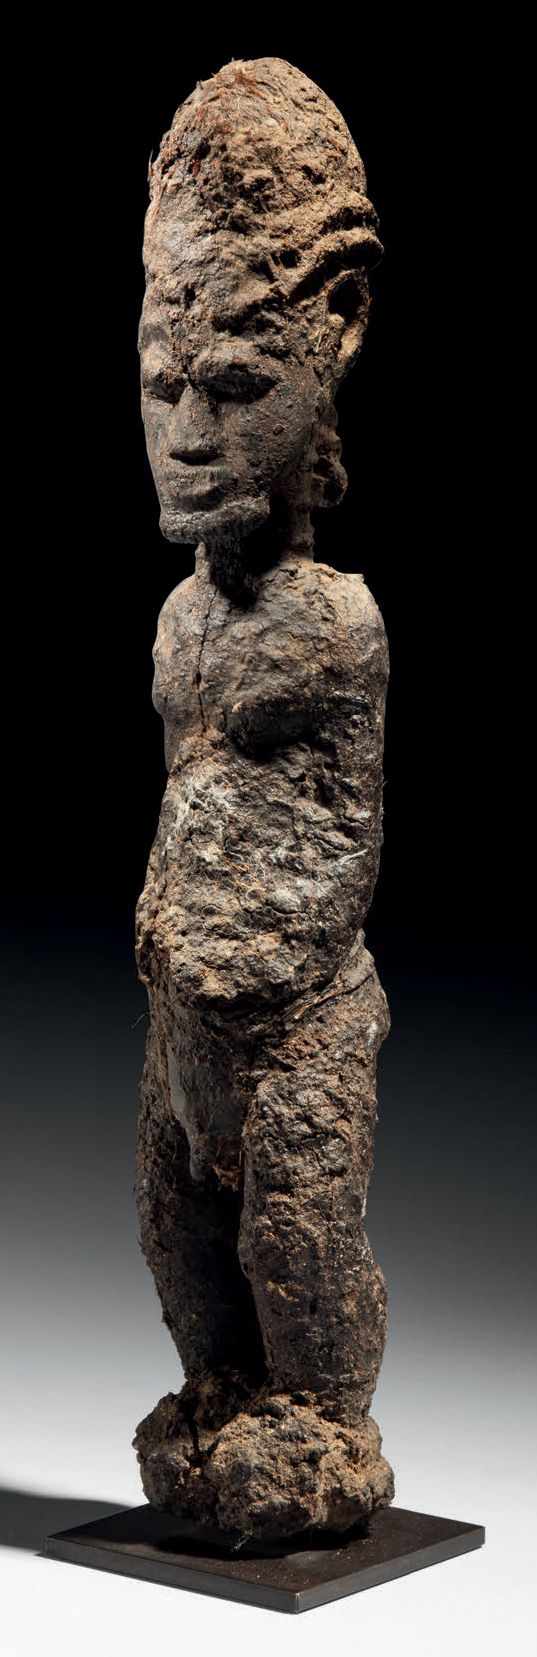 Null - BAULE STATUE, IVORY COAST
Wood
H. 38 cm
Representing a standing male figu&hellip;